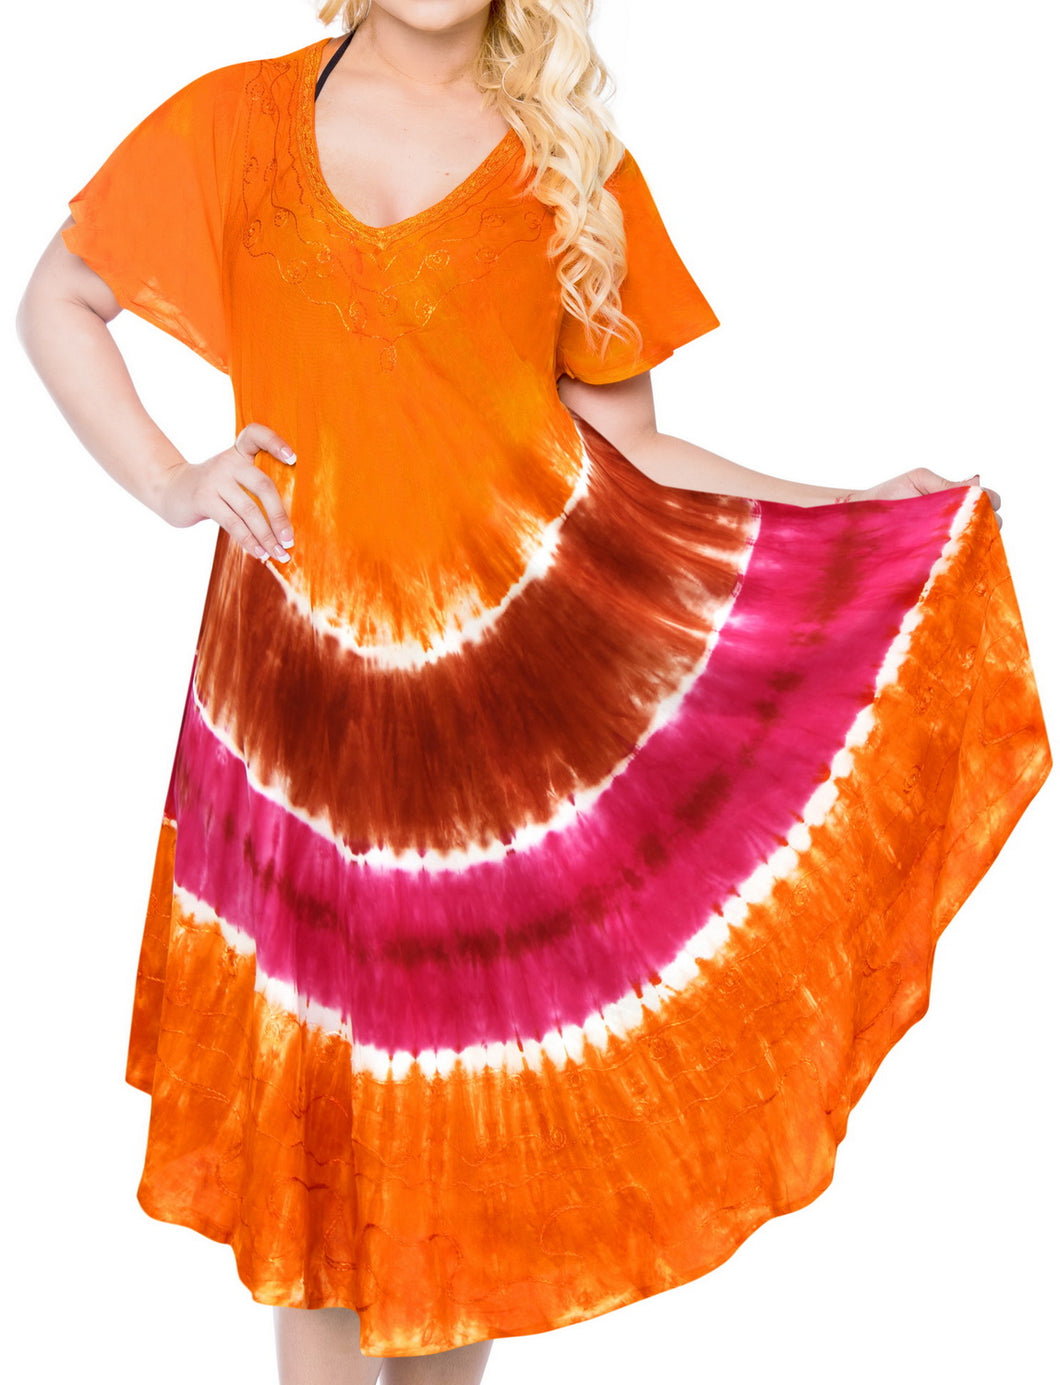 la-leela-dress-beach-cover-up-rayon-tie-dye-casual-luau-boho-swimwear-stretchy-osfm-14-20-l-2x-orange_3643